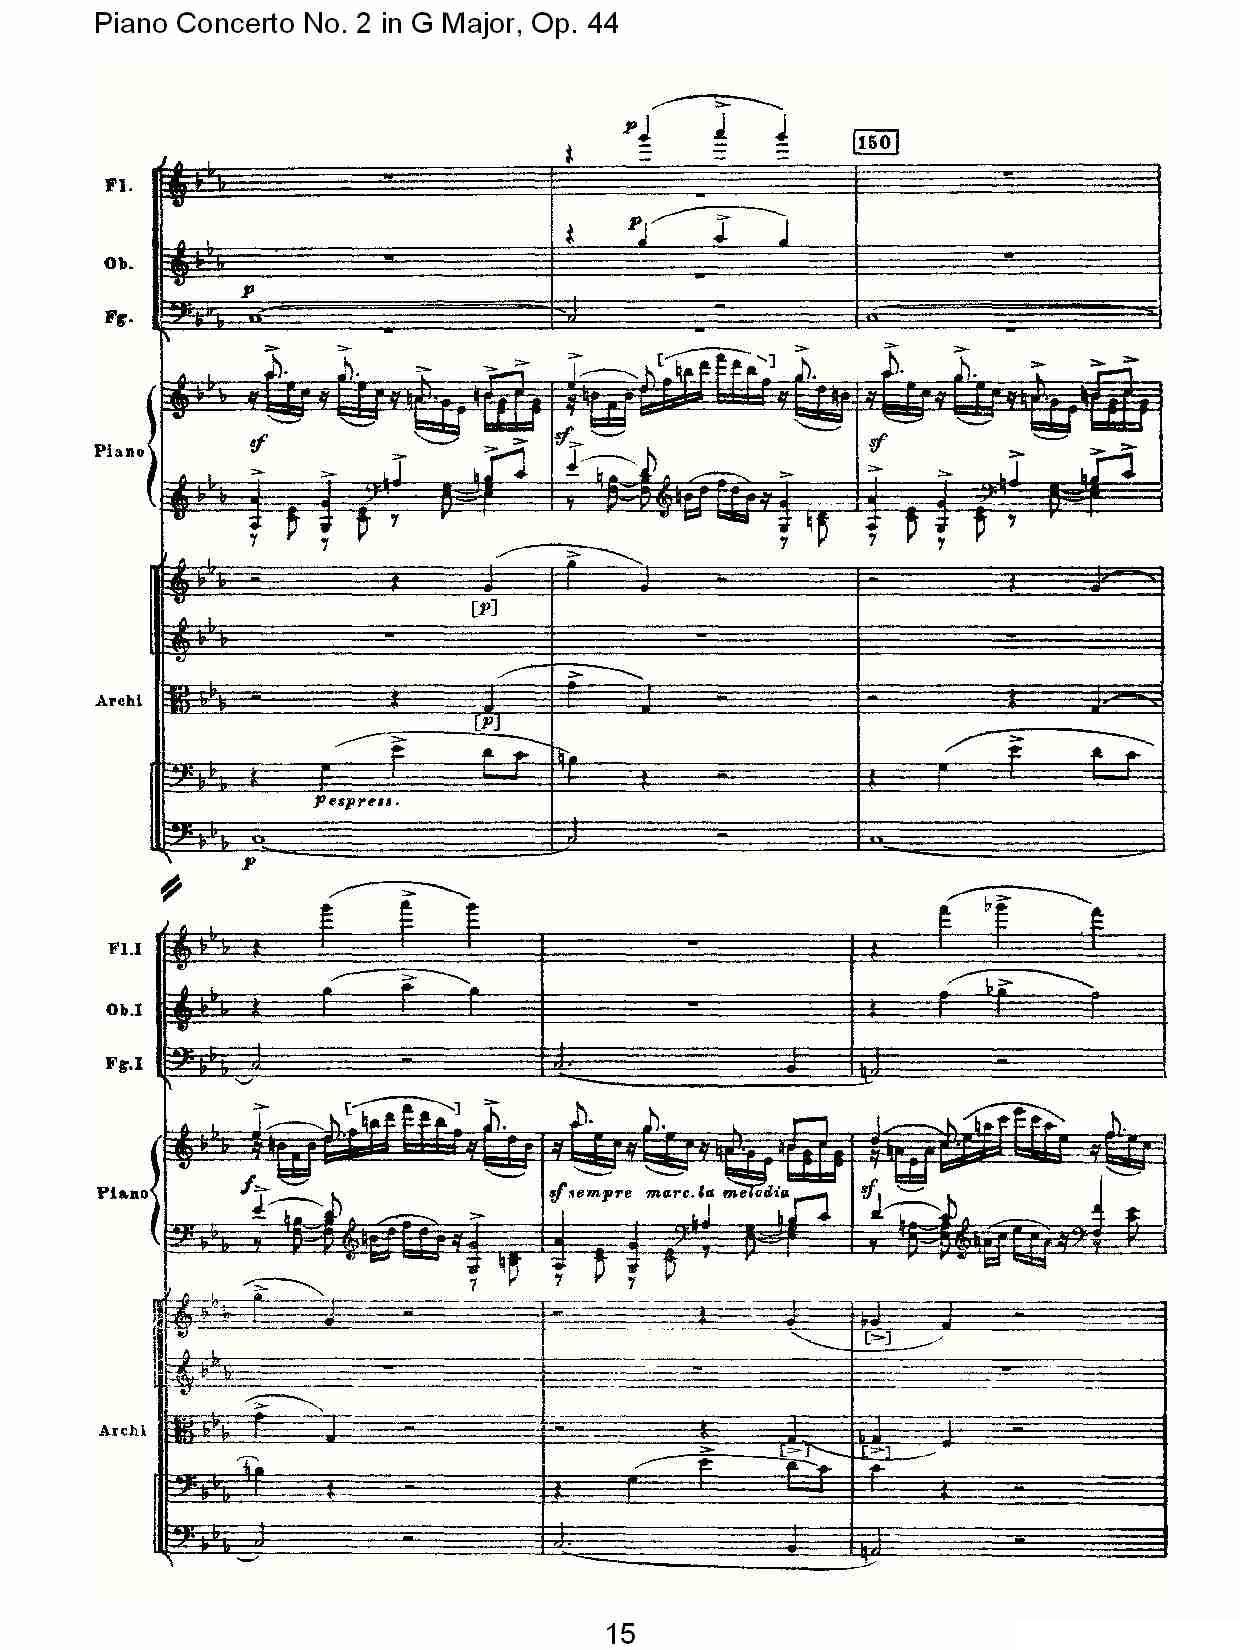 G大调第二钢琴协奏曲, Op.44第一乐章（一）钢琴曲谱（图15）